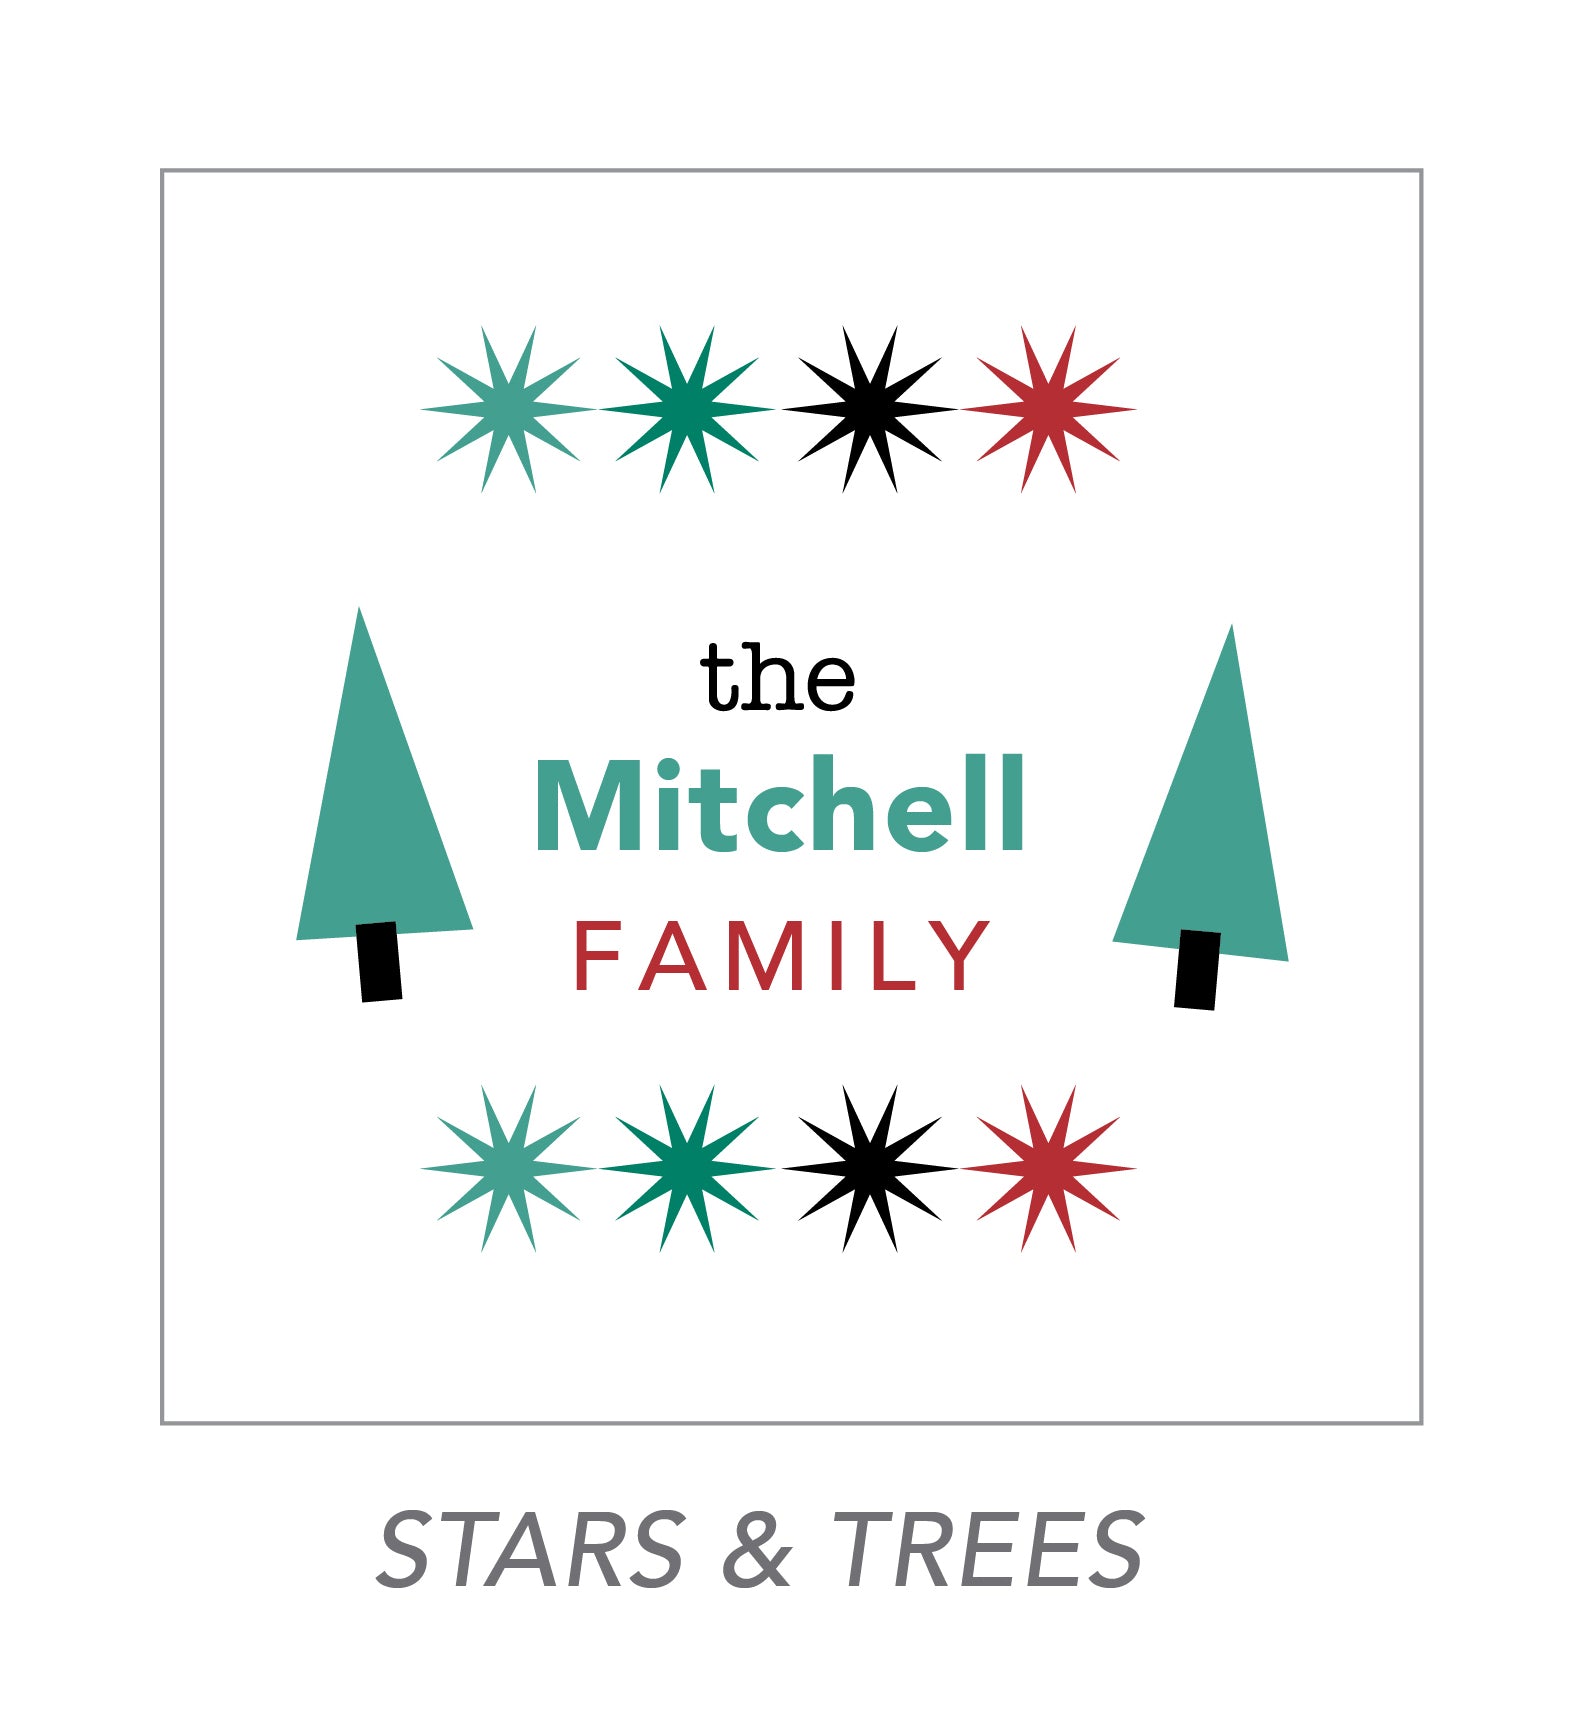 christmas stickers (stars & trees)